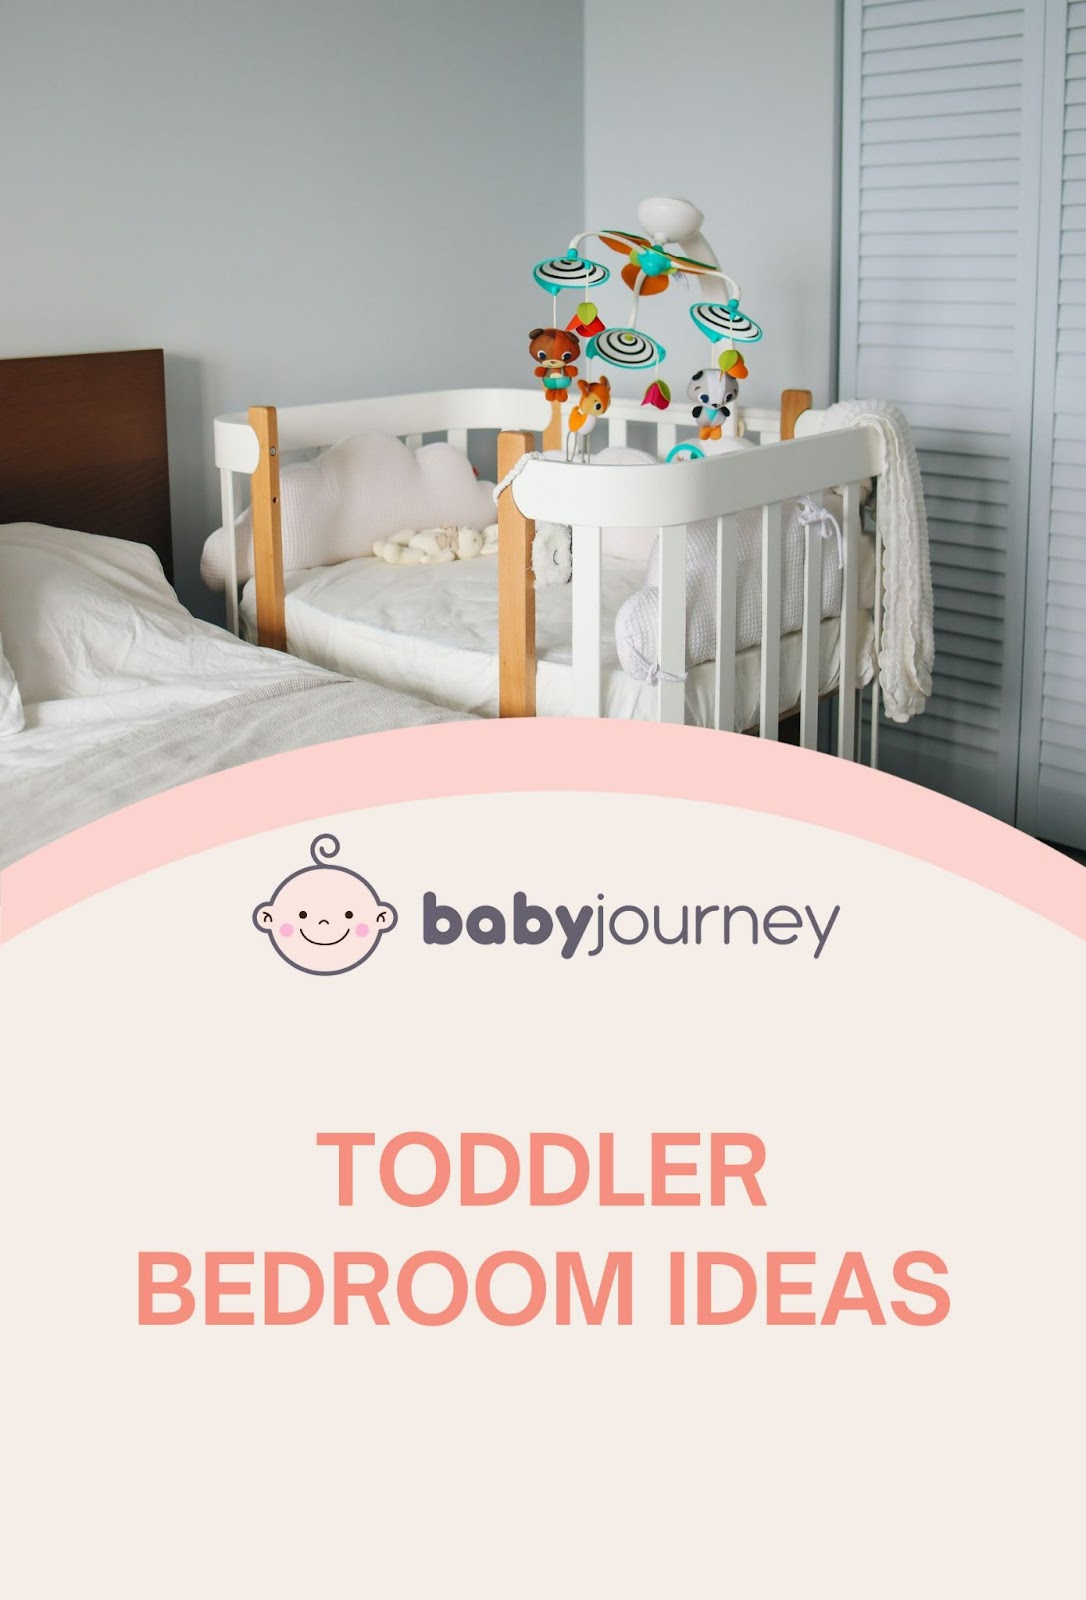  Toddler bedroom ideas fpinterest - Baby Journey